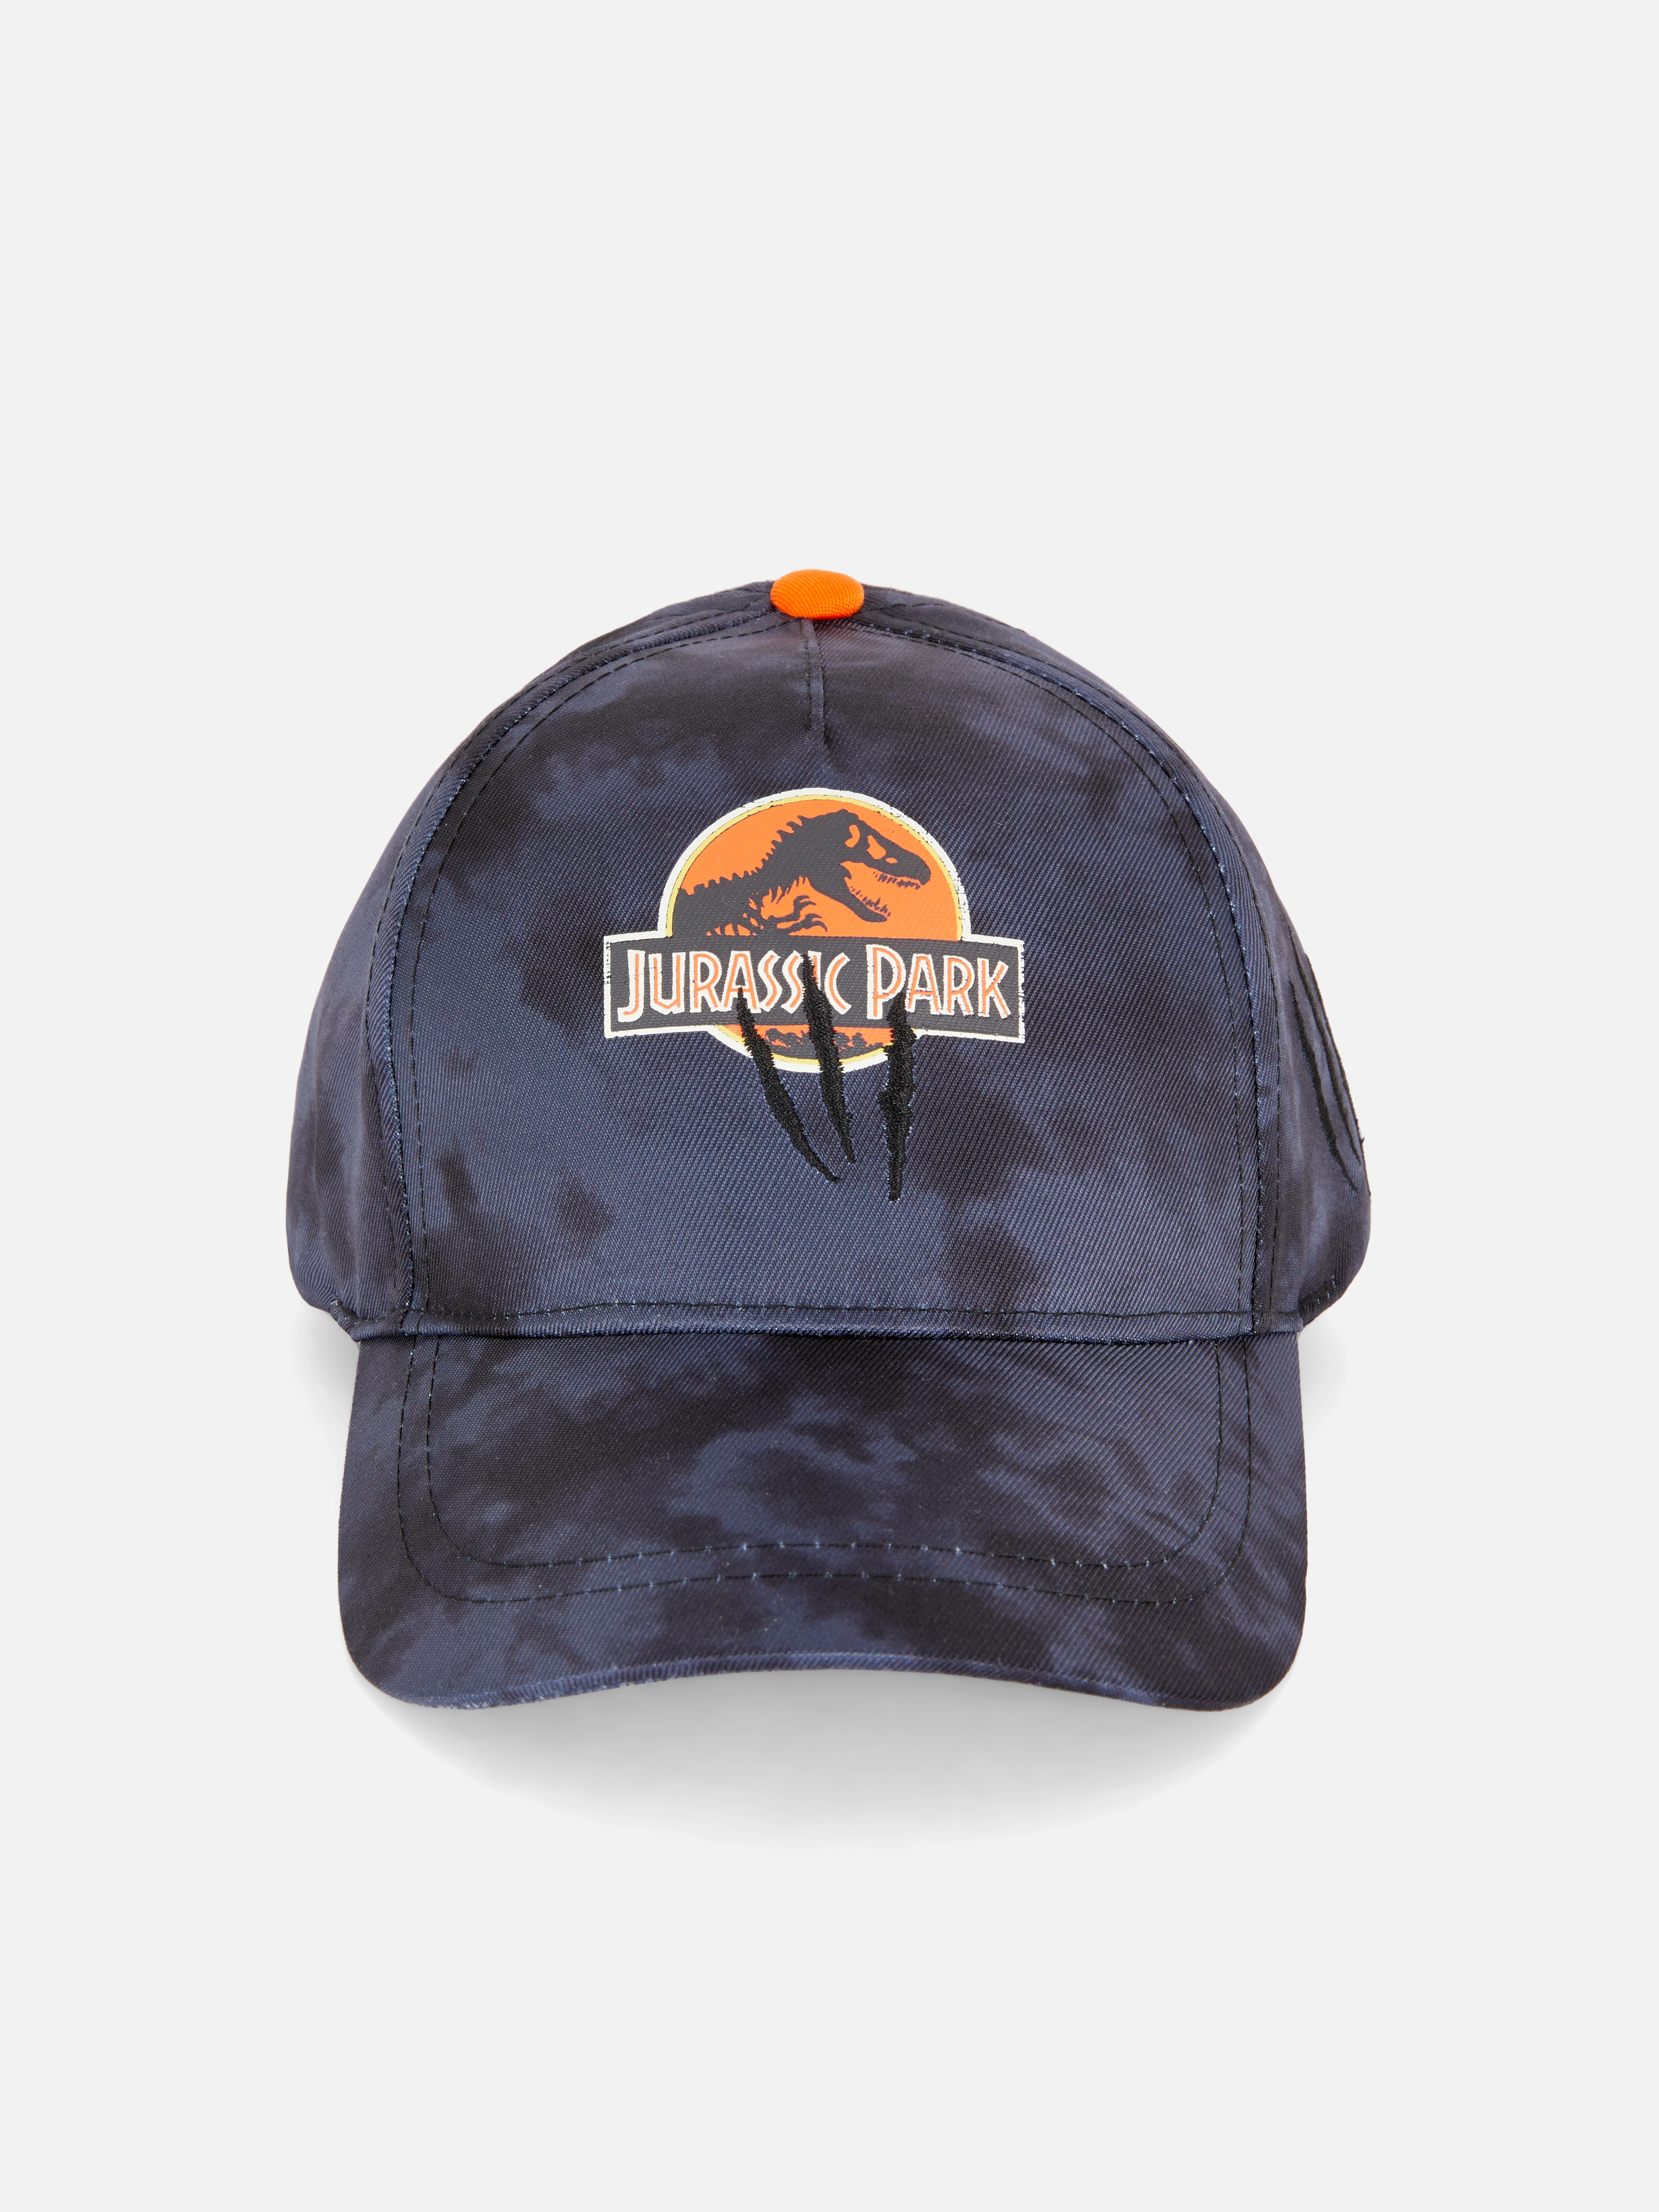 Jurassic Park Baseball Cap